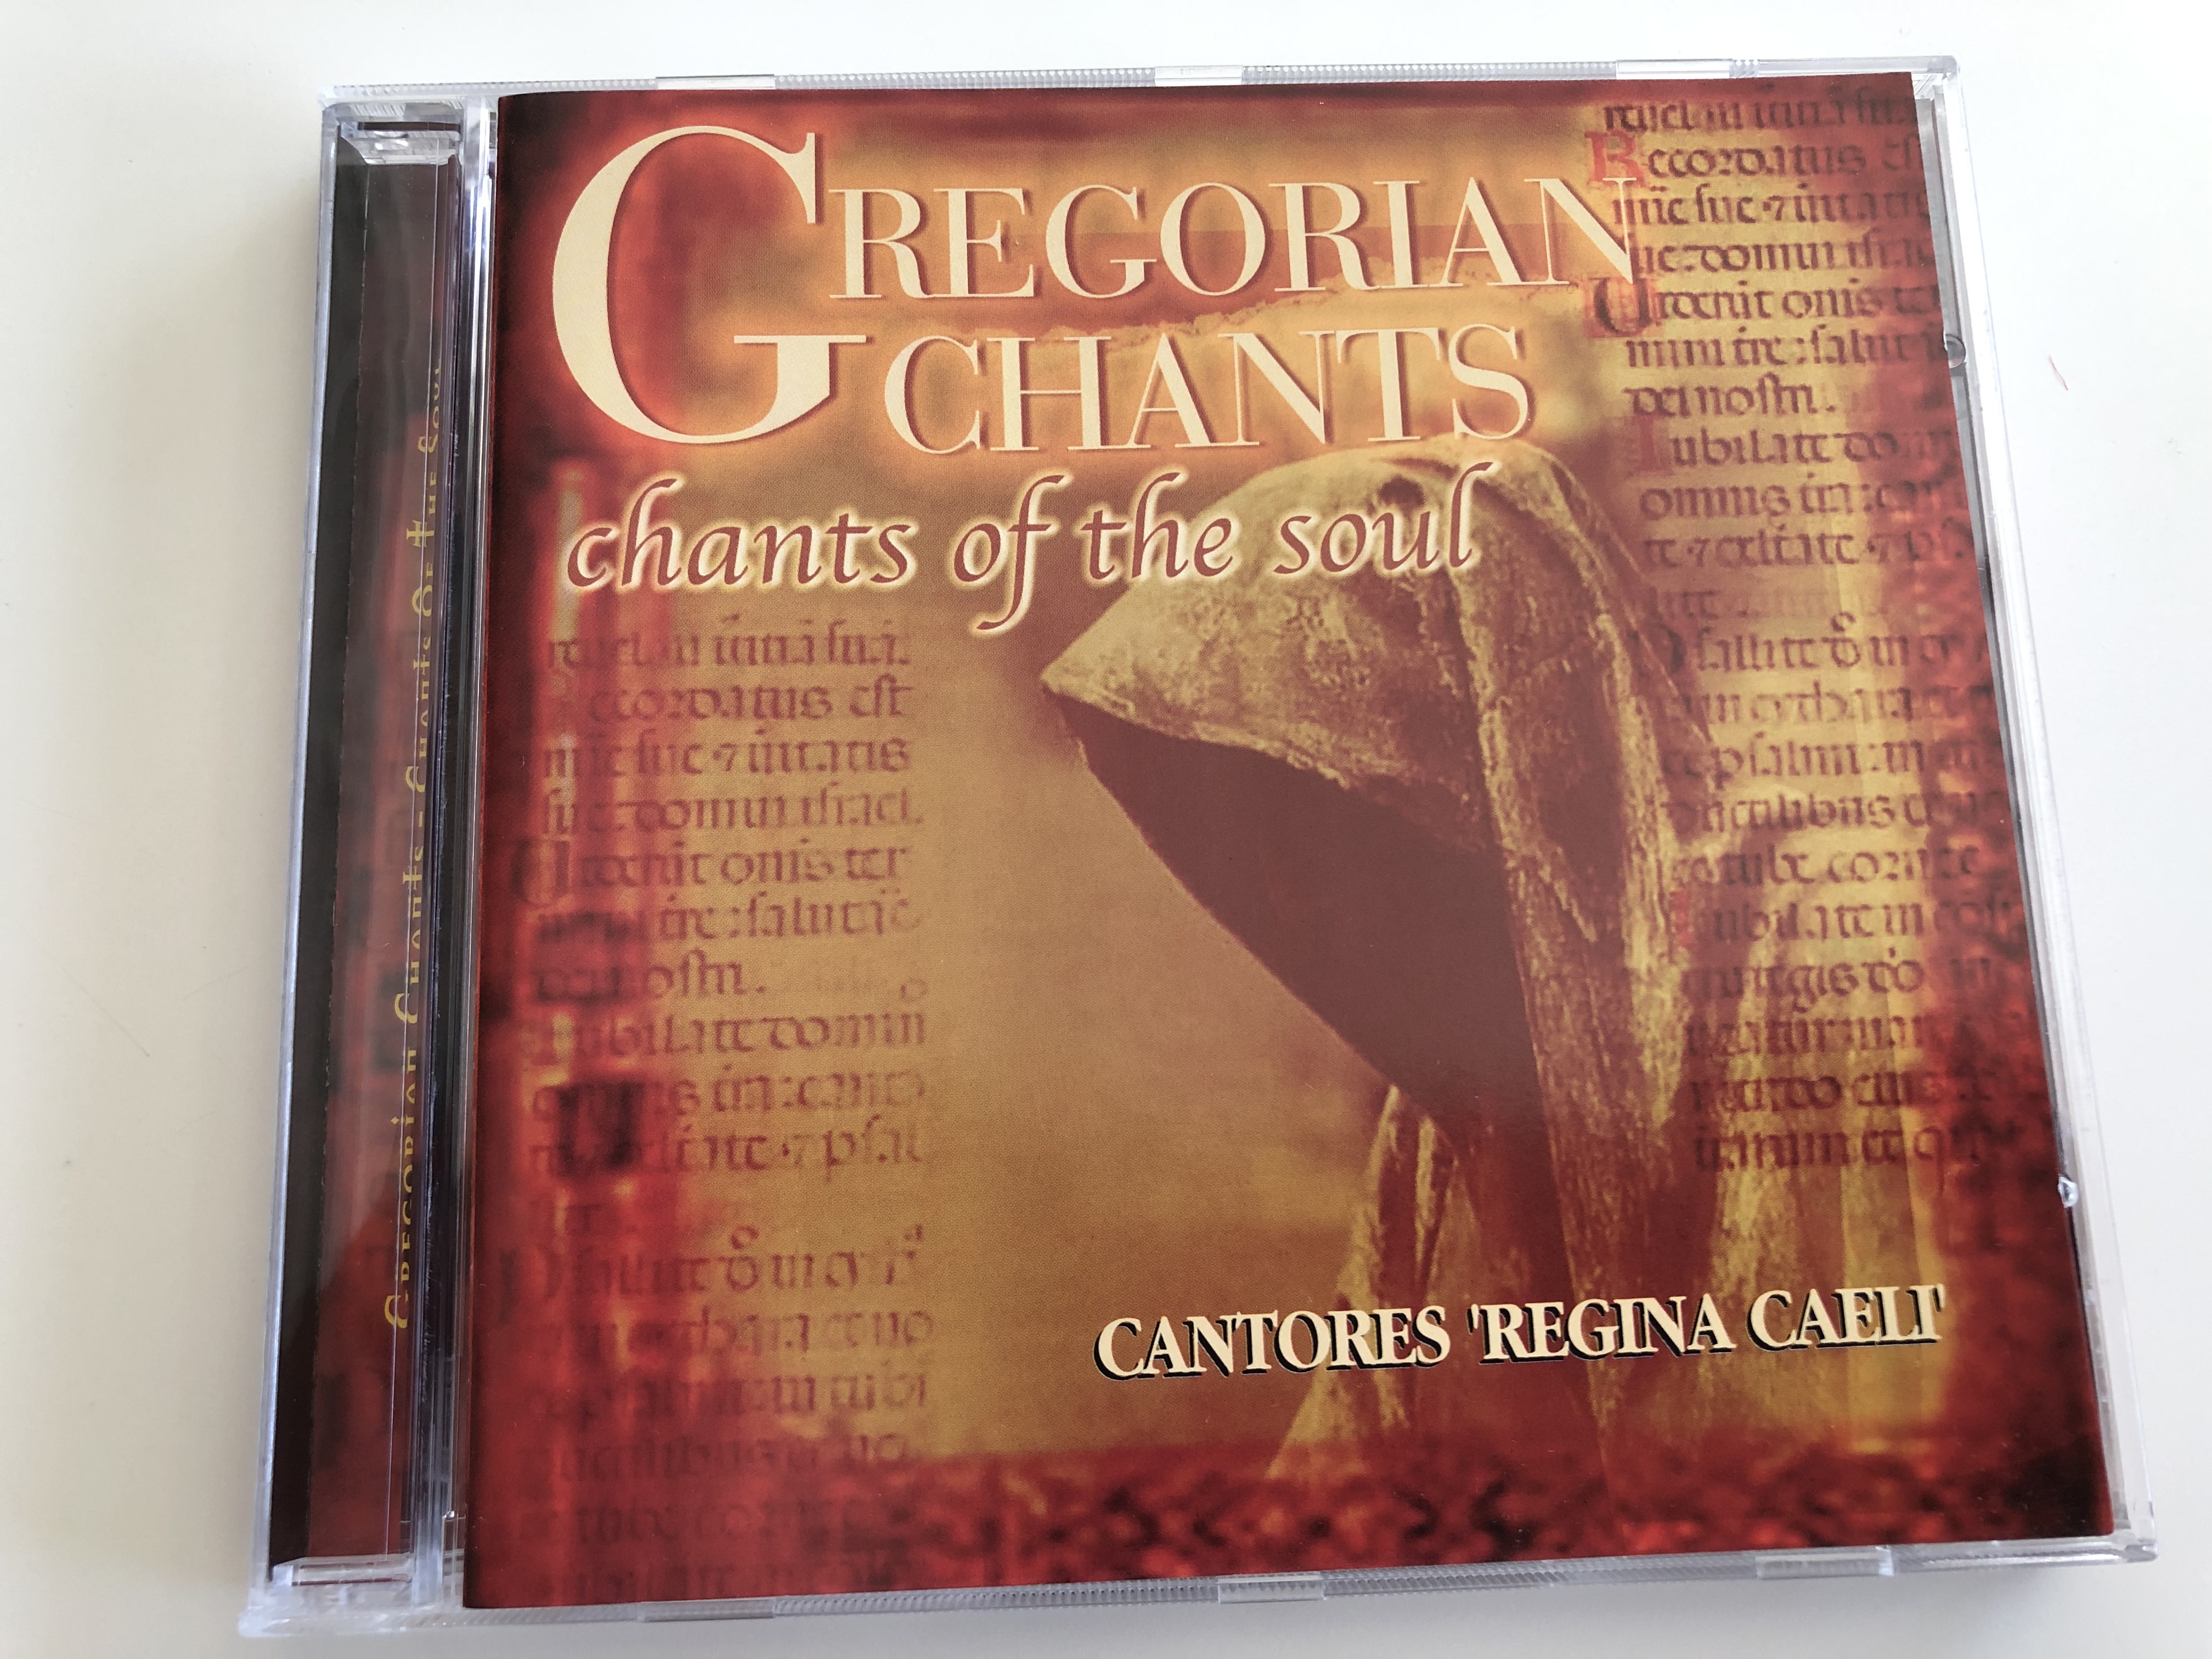 gregorian-chants-chants-of-the-soul-cantores-regina-caeli-audio-cd-2002-a-play-1-.jpg